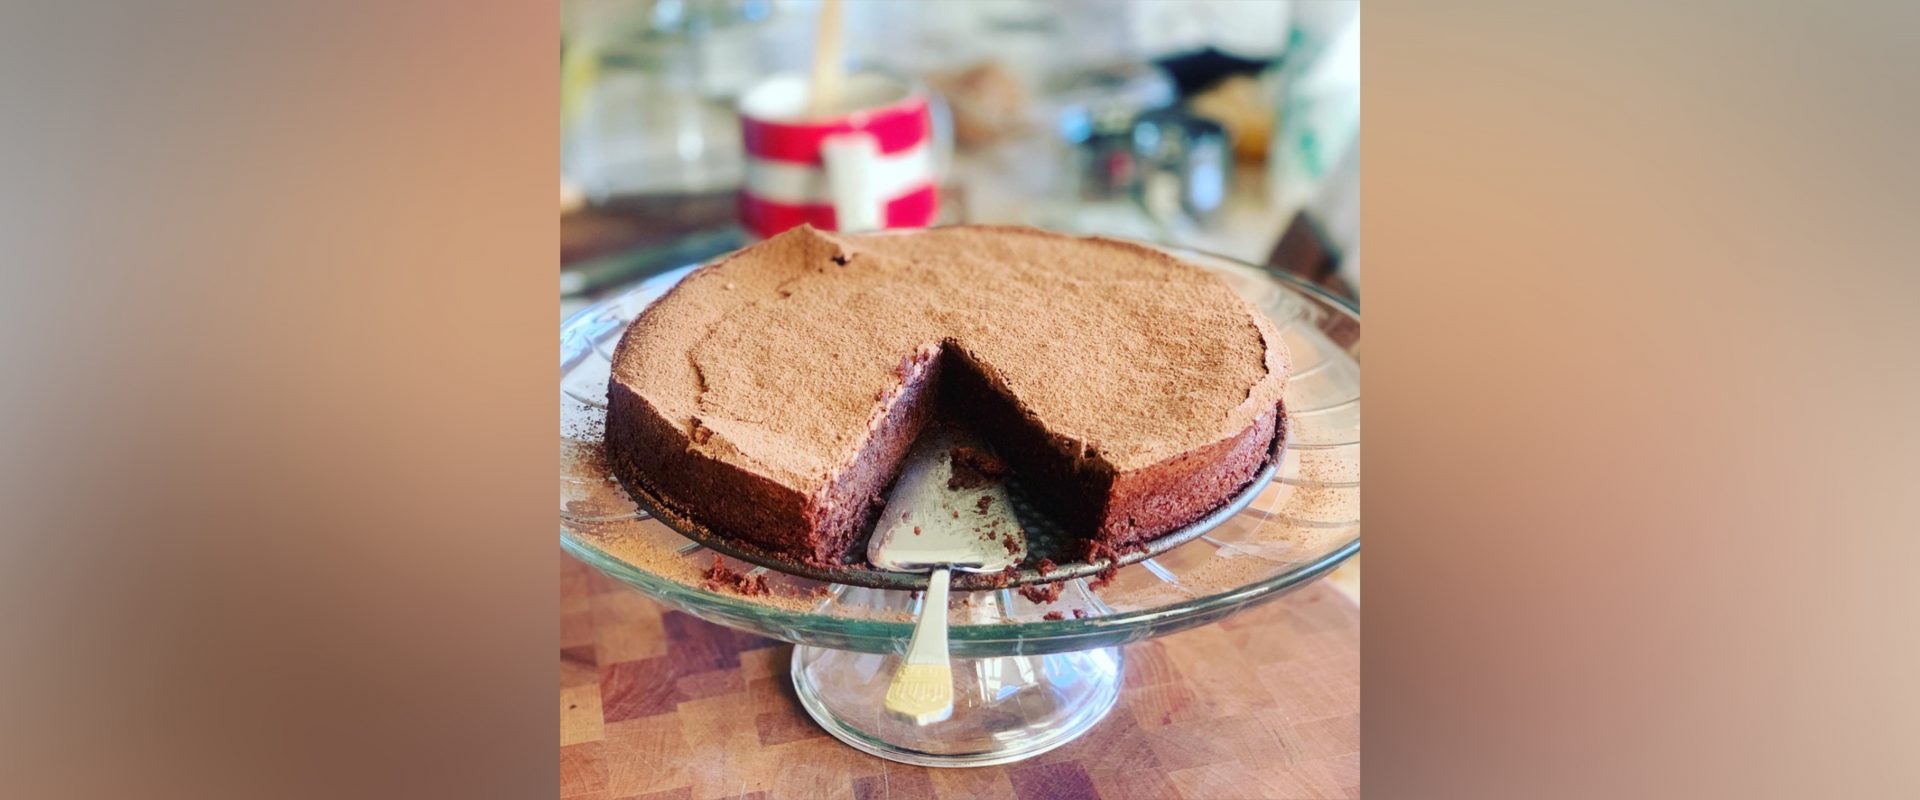 Permalink to: Sunken Chocolate Amaretto Cake